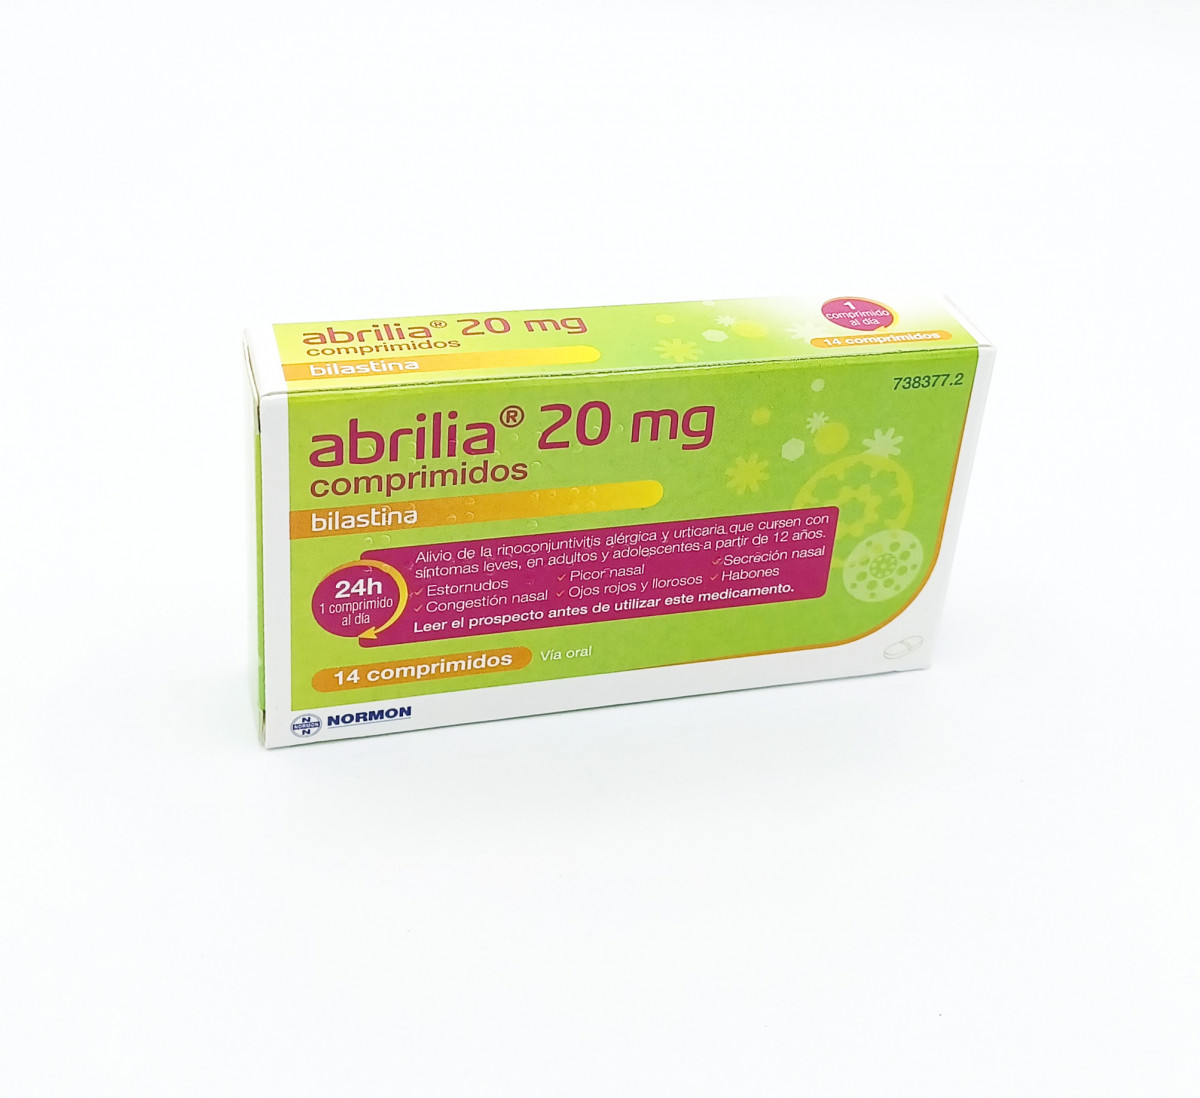 ABRILIA 20 MG COMPRIMIDOS EFG, 14 comprimidos (Blister Al/Al/PA-PVC) fotografía del envase.